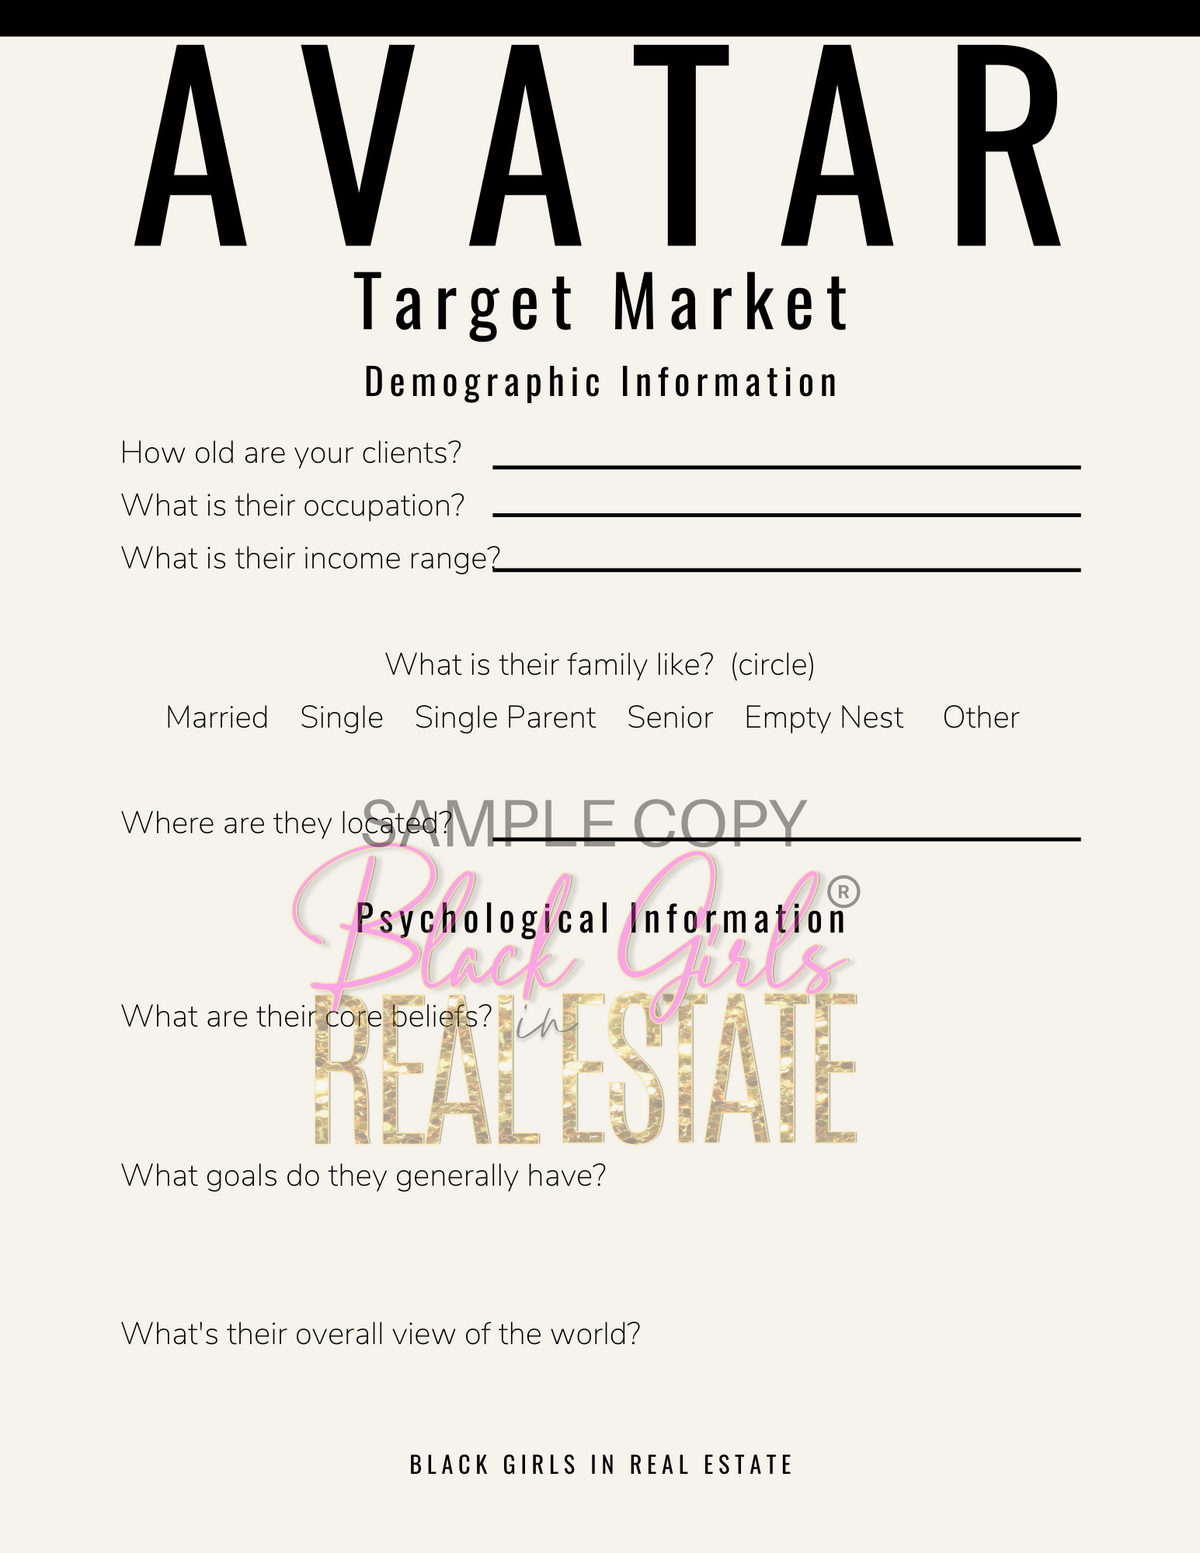 Agent Profit Digital Planner (E-Book)